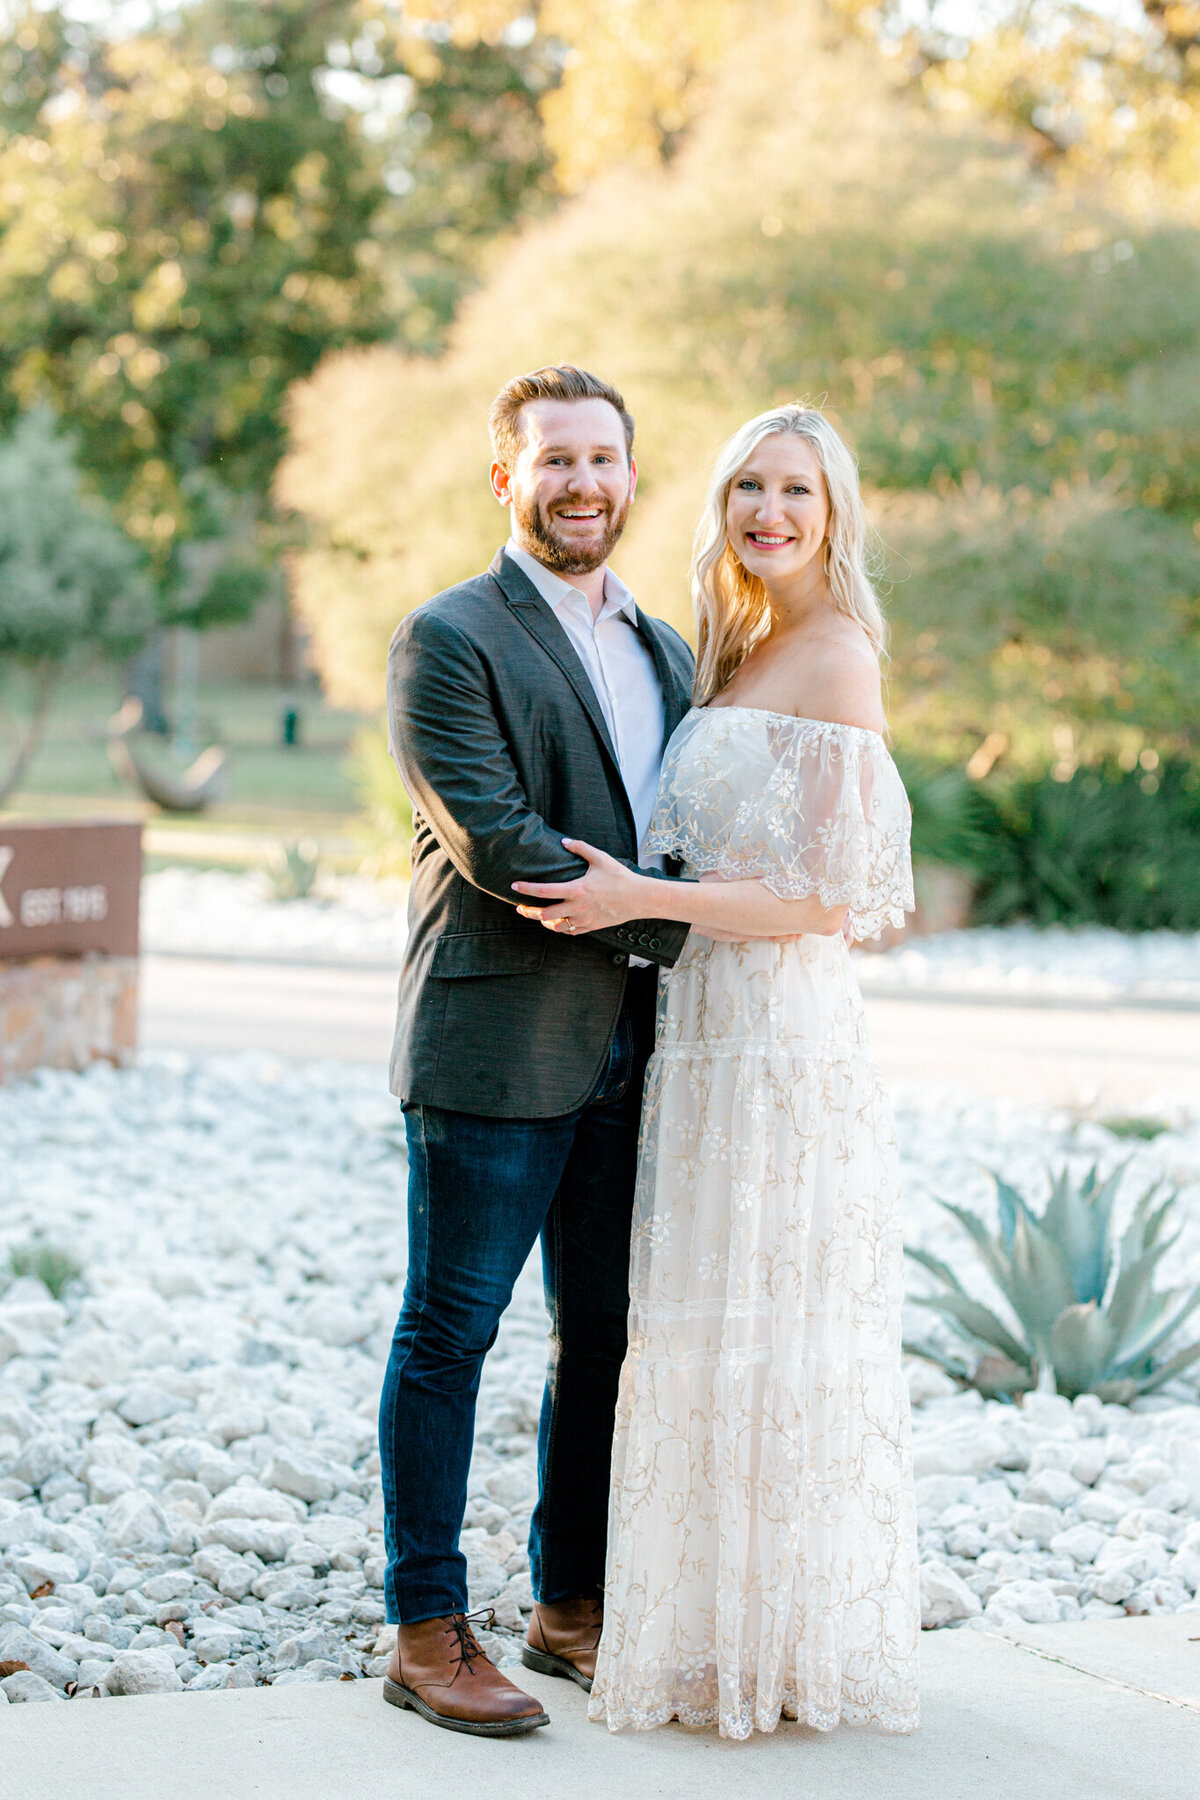 Jessica & Blake Engagement Session at Reverchon Park | Dallas Wedding Photographer-3